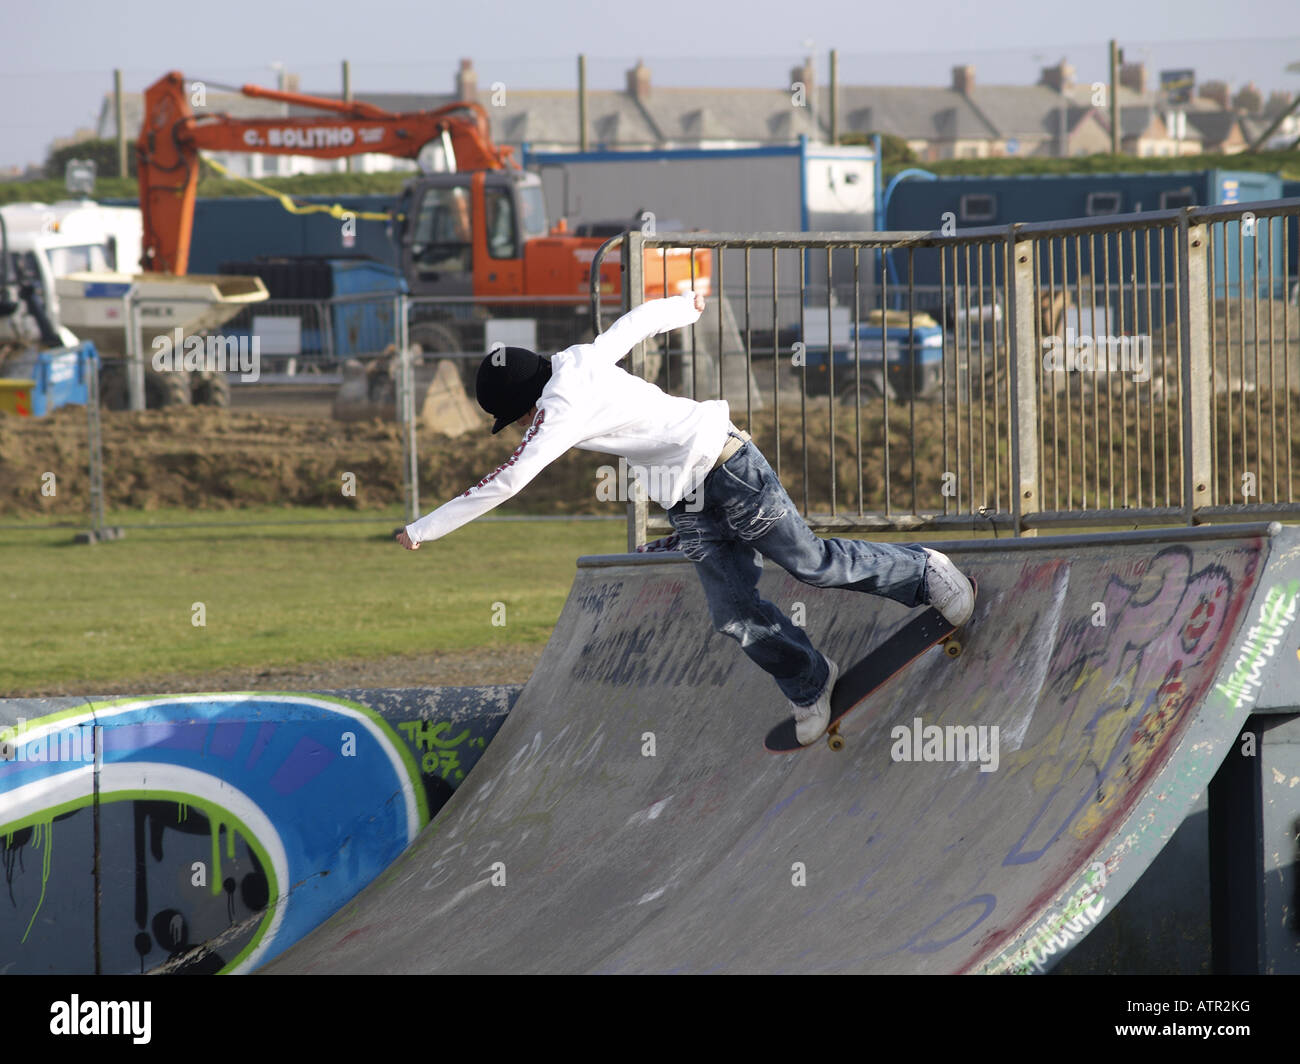 Skateboarder coming down a halfpipe in a skatepark Stock Photo